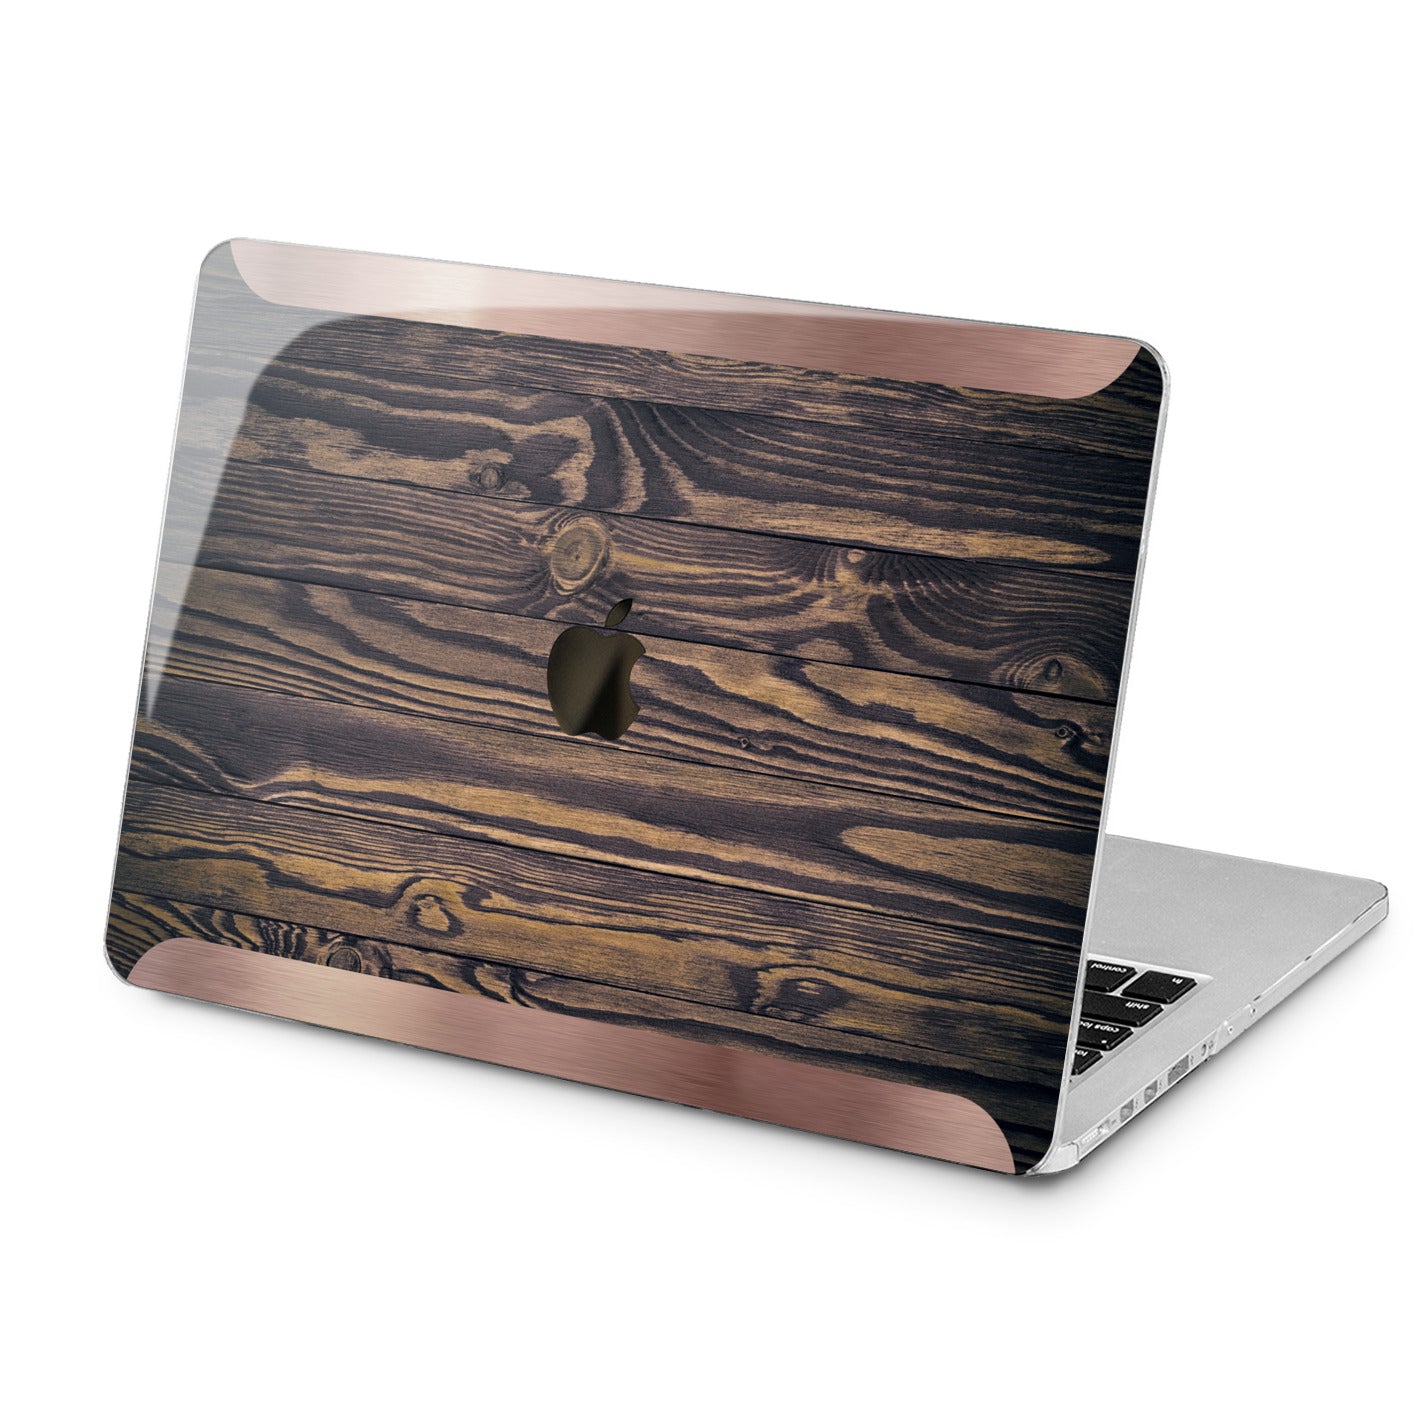 Lex Altern Oak Design Art Case for your Laptop Apple Macbook.